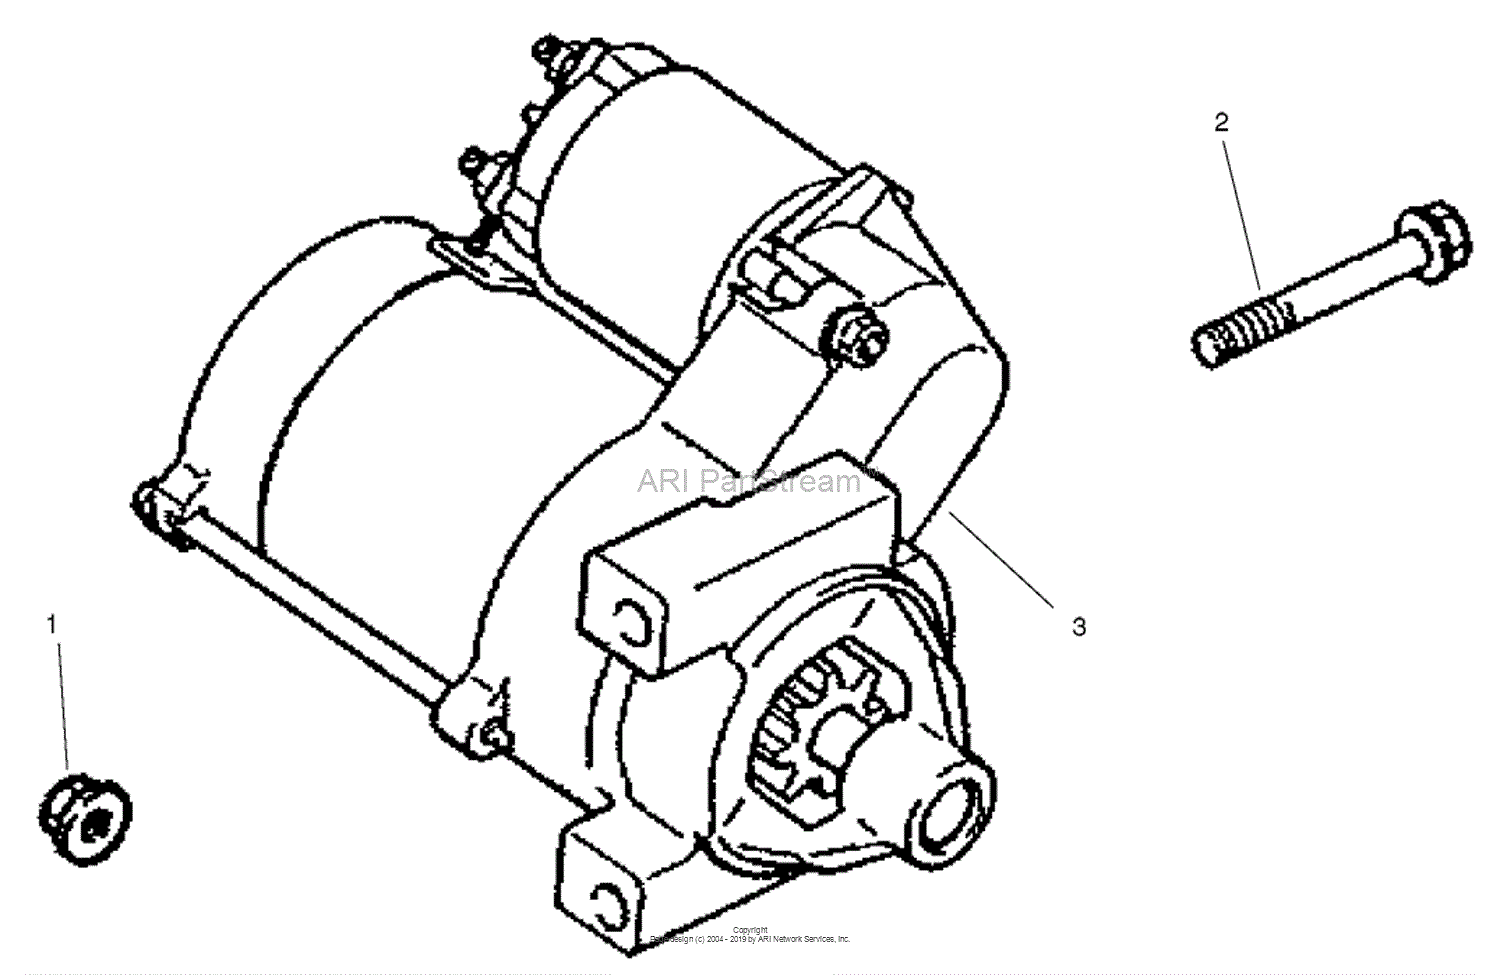 Kohler Ch22s Wiring Diagram. Vehicle. Vehicle Wiring Diagrams kohler ch22s wiring diagram 